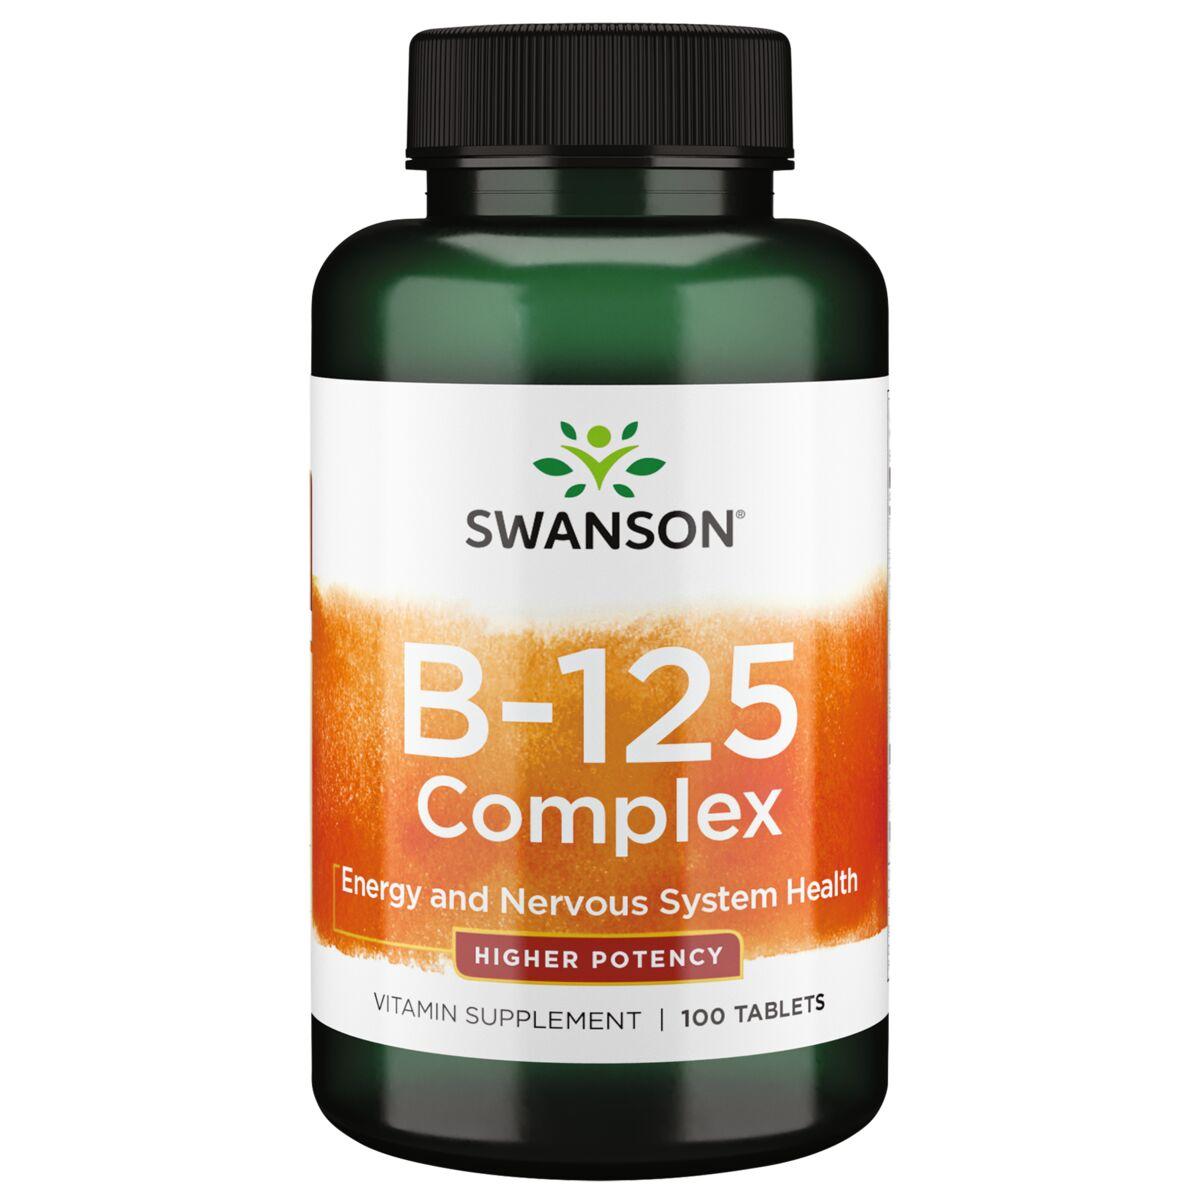 Swanson Premium Vitamin B-125 Complex - Higher Potency | 100 Tabs | Vitamin C